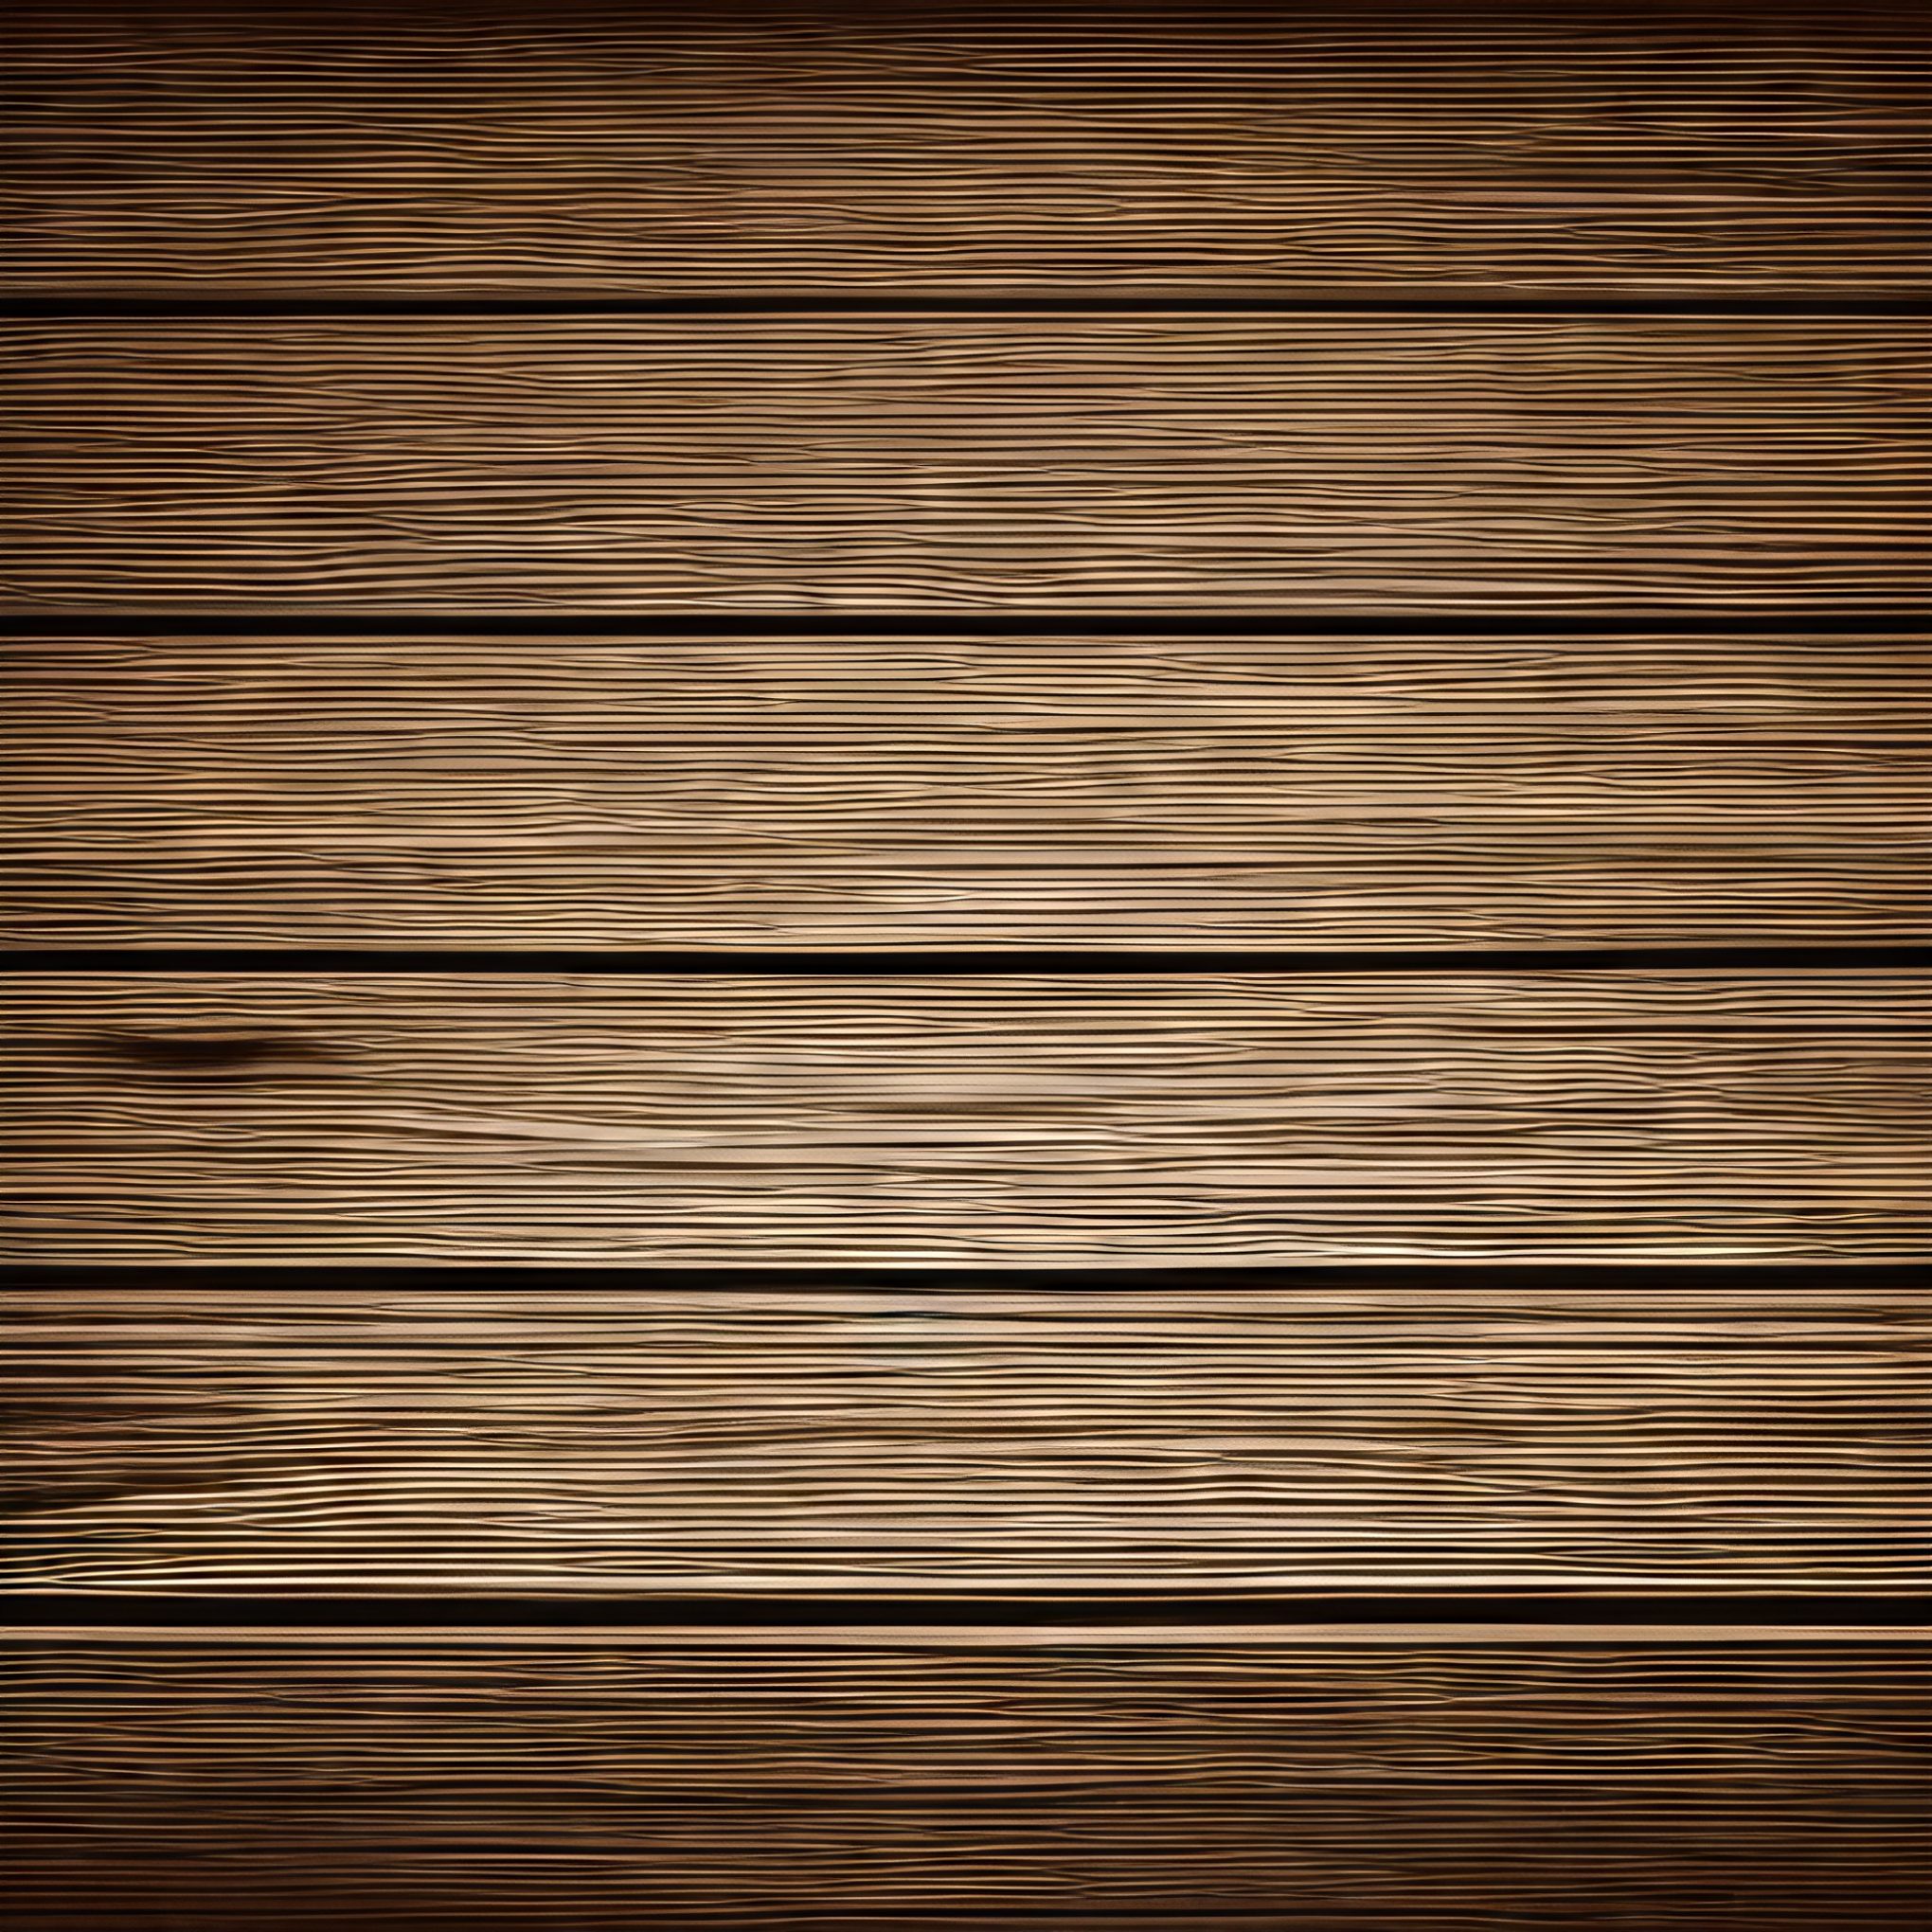 Dark Wooden Wood grain Floorboard Background Free Stock Image